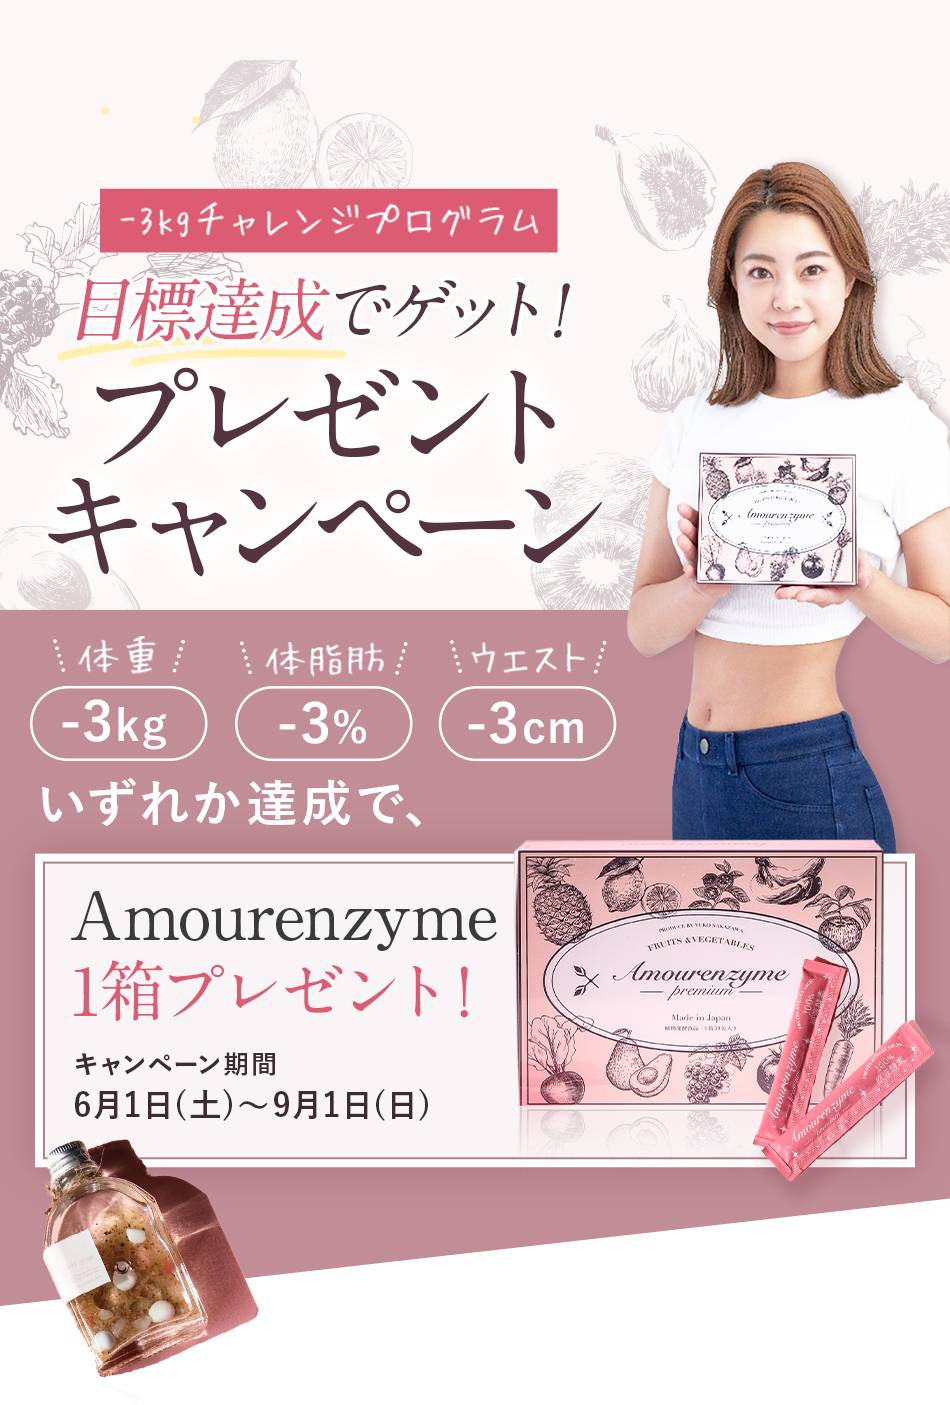 Amourenzyme -3kg チャレンジプログラム 目標達成でゲット!プレゼントキャンペーン